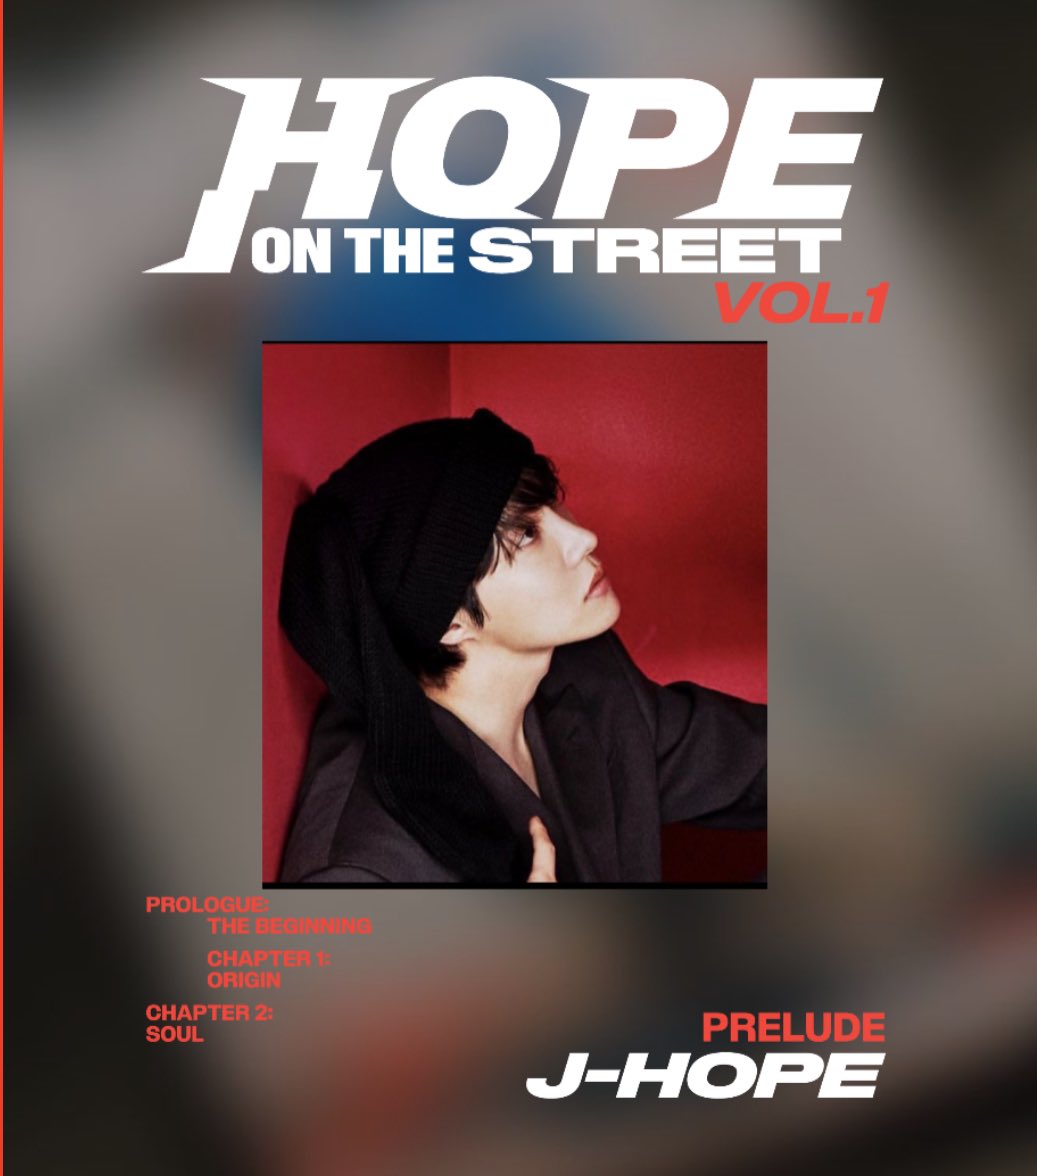 J-HOPE IS COMING 
HOPE ON THE STREET IS COMING  
#XXXX_ON_THE_STREET
#HOPE_ON_THE_STREET #HOPE_ON_THE_STREET_VOL1